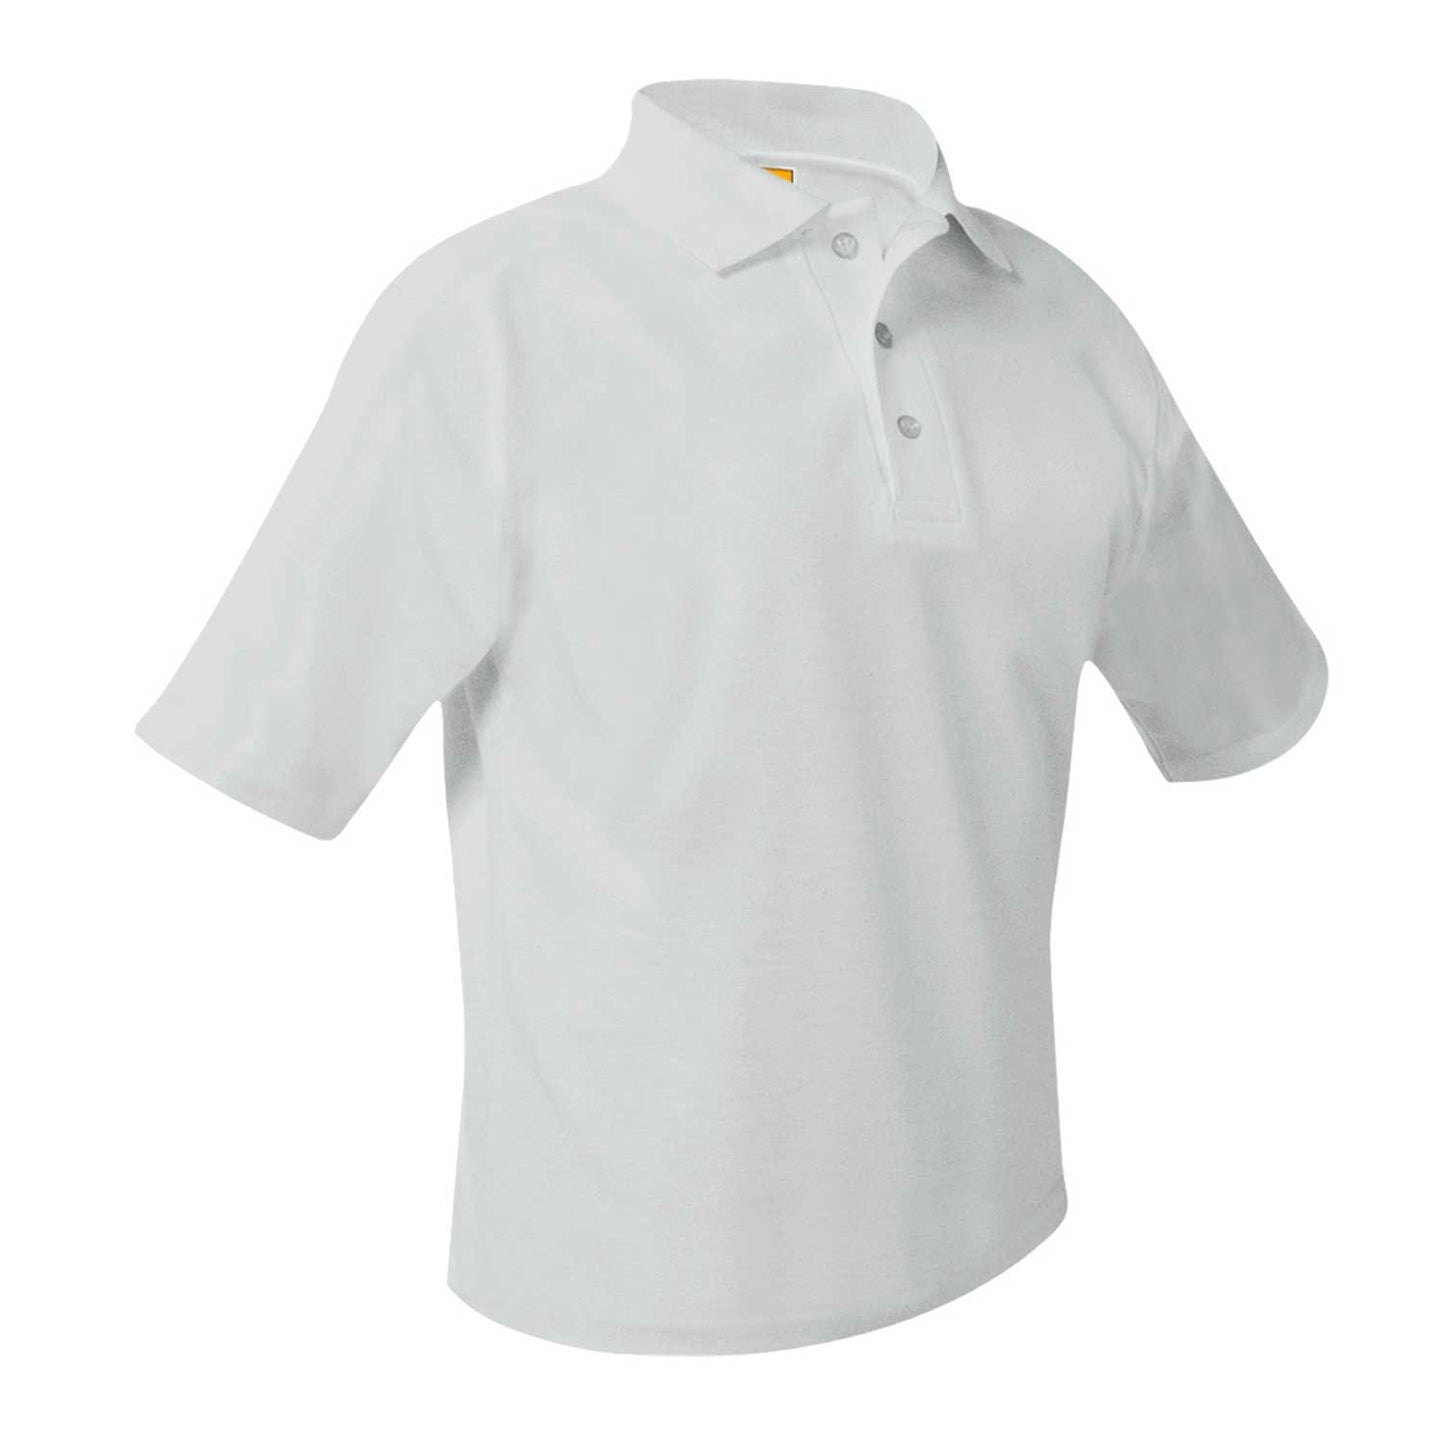 Unisex Pique Polo Shirt, Short Sleeves, Hemmed w/Logo - 1104